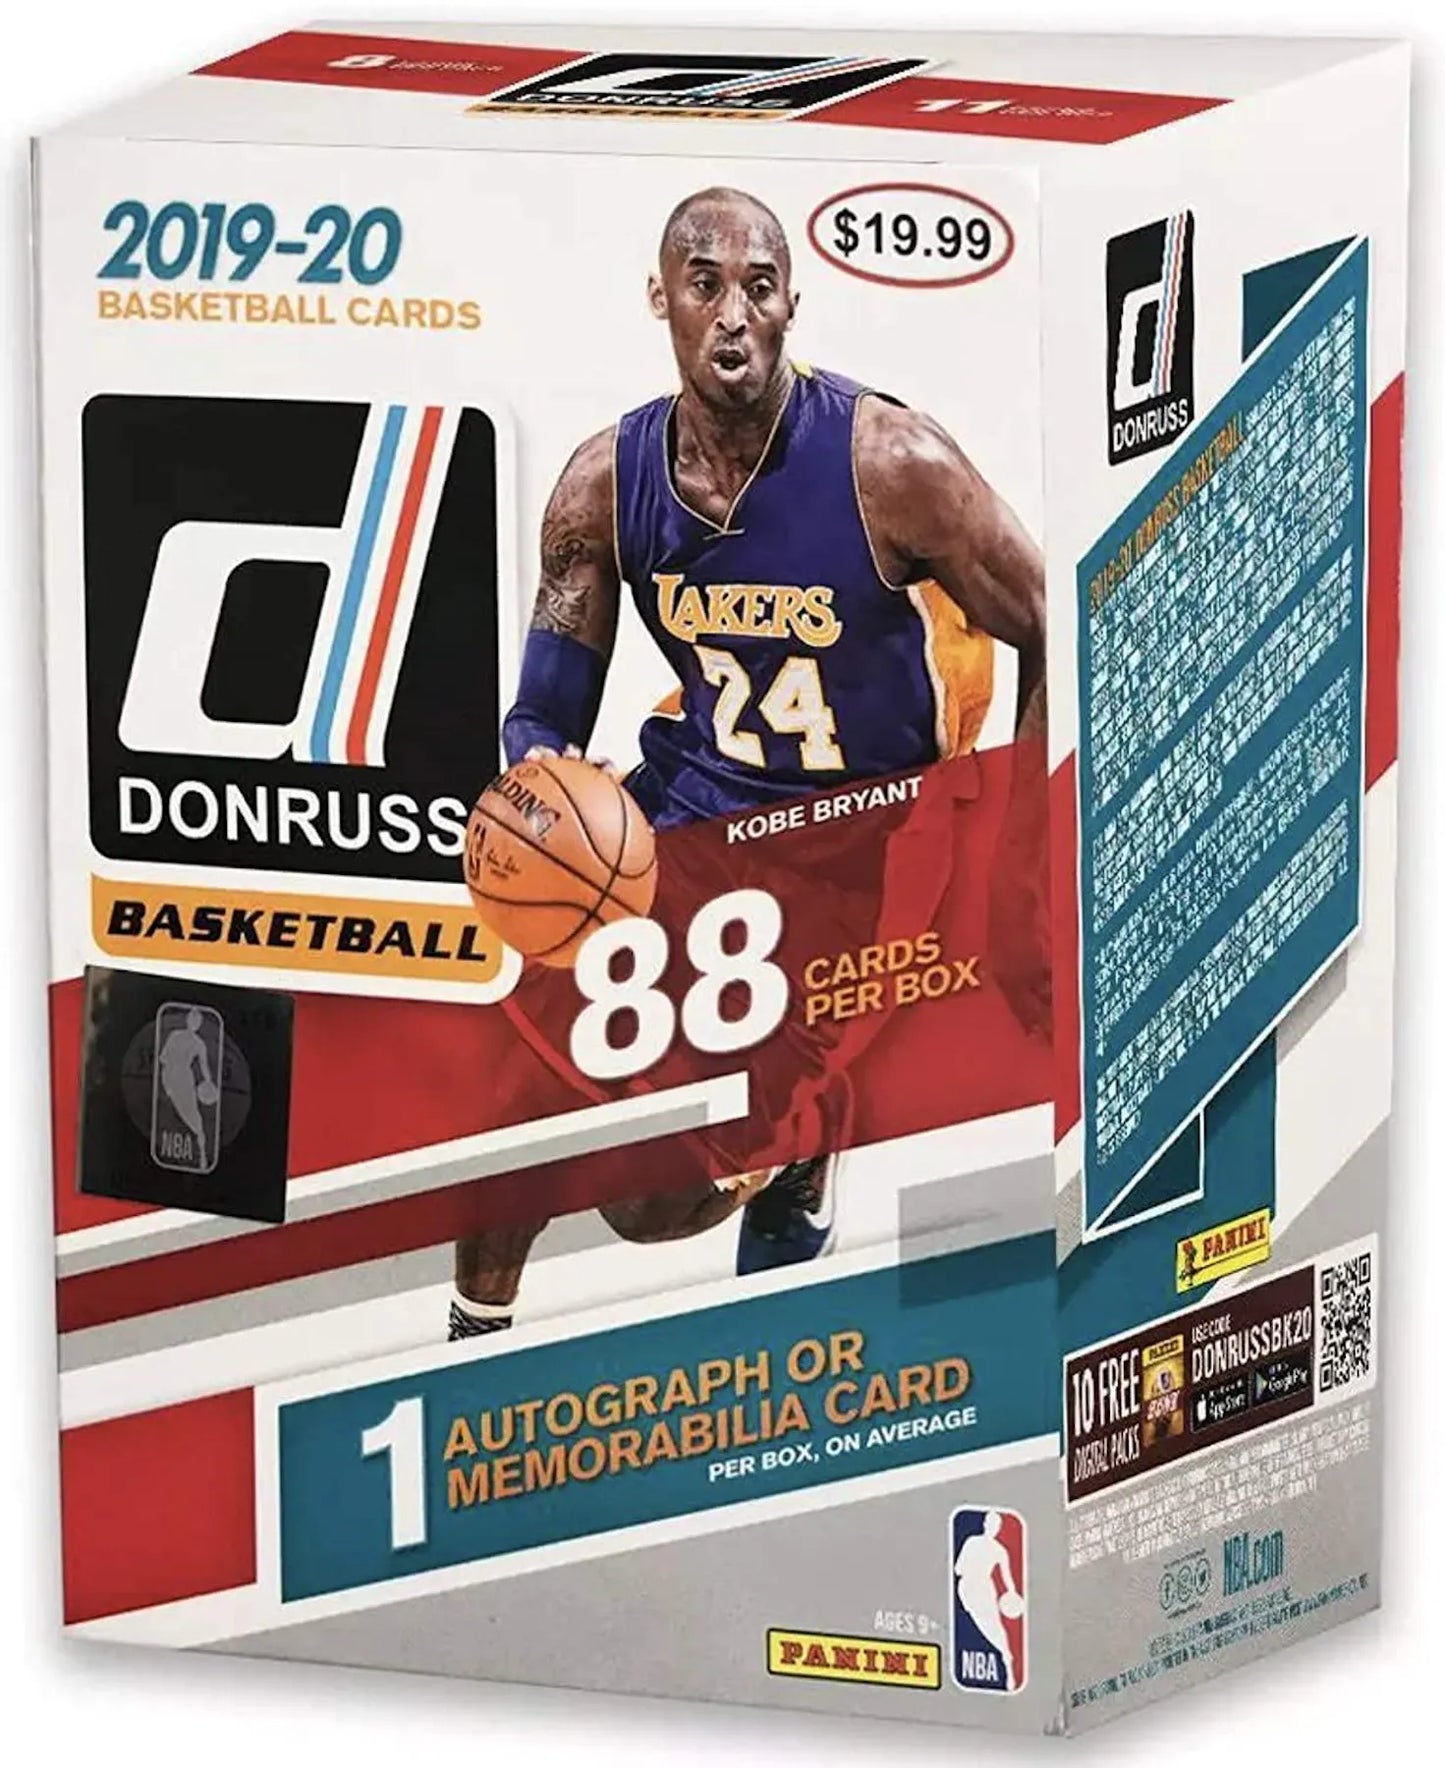 2019/20 Panini Donruss Basketball 11-Pack Blaster Box